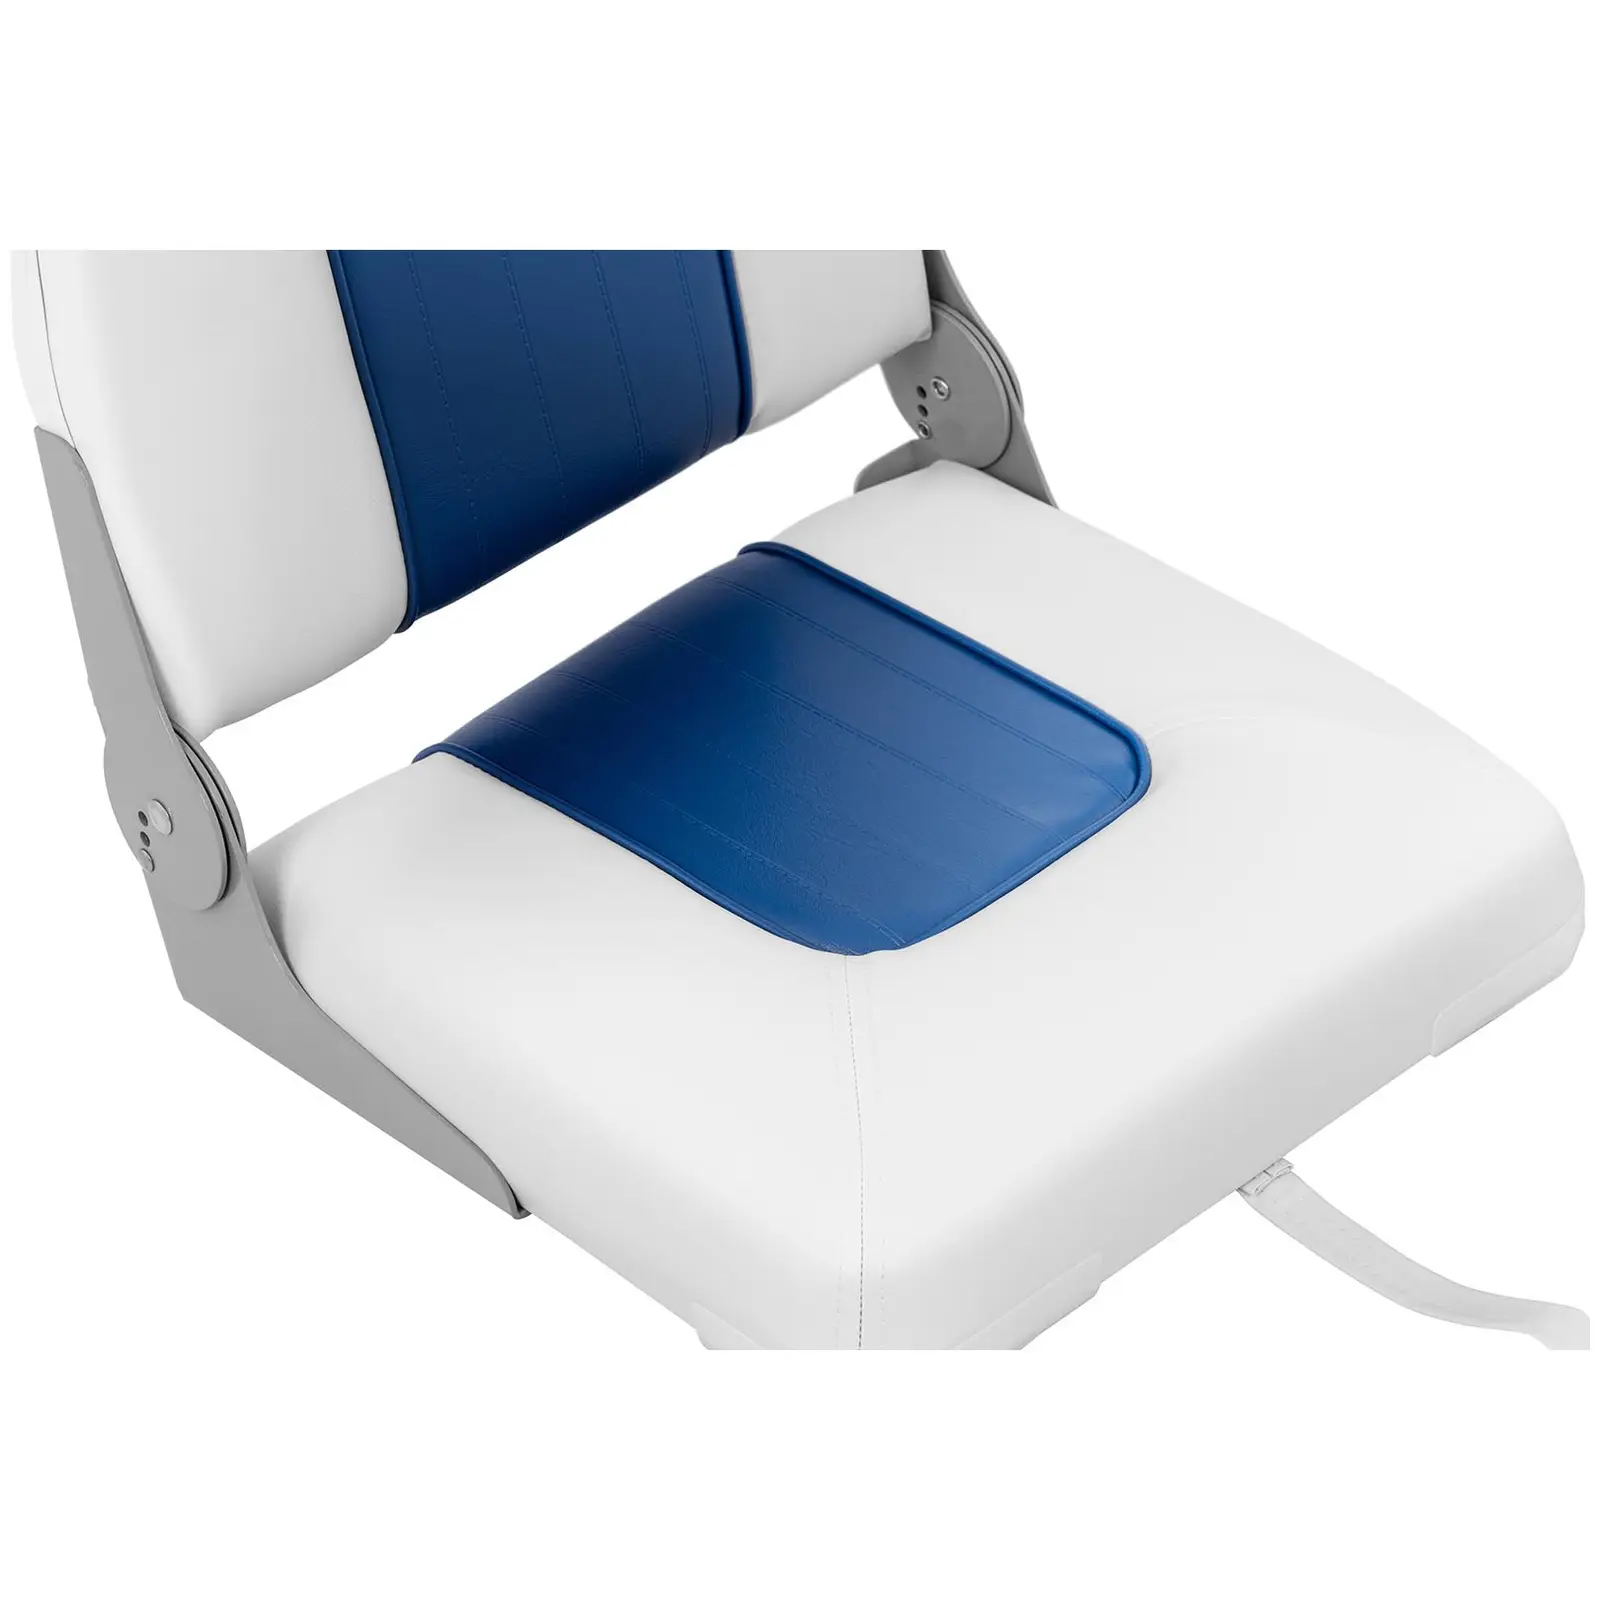 Boat Seat - 38x42x46 cm - Blue, White